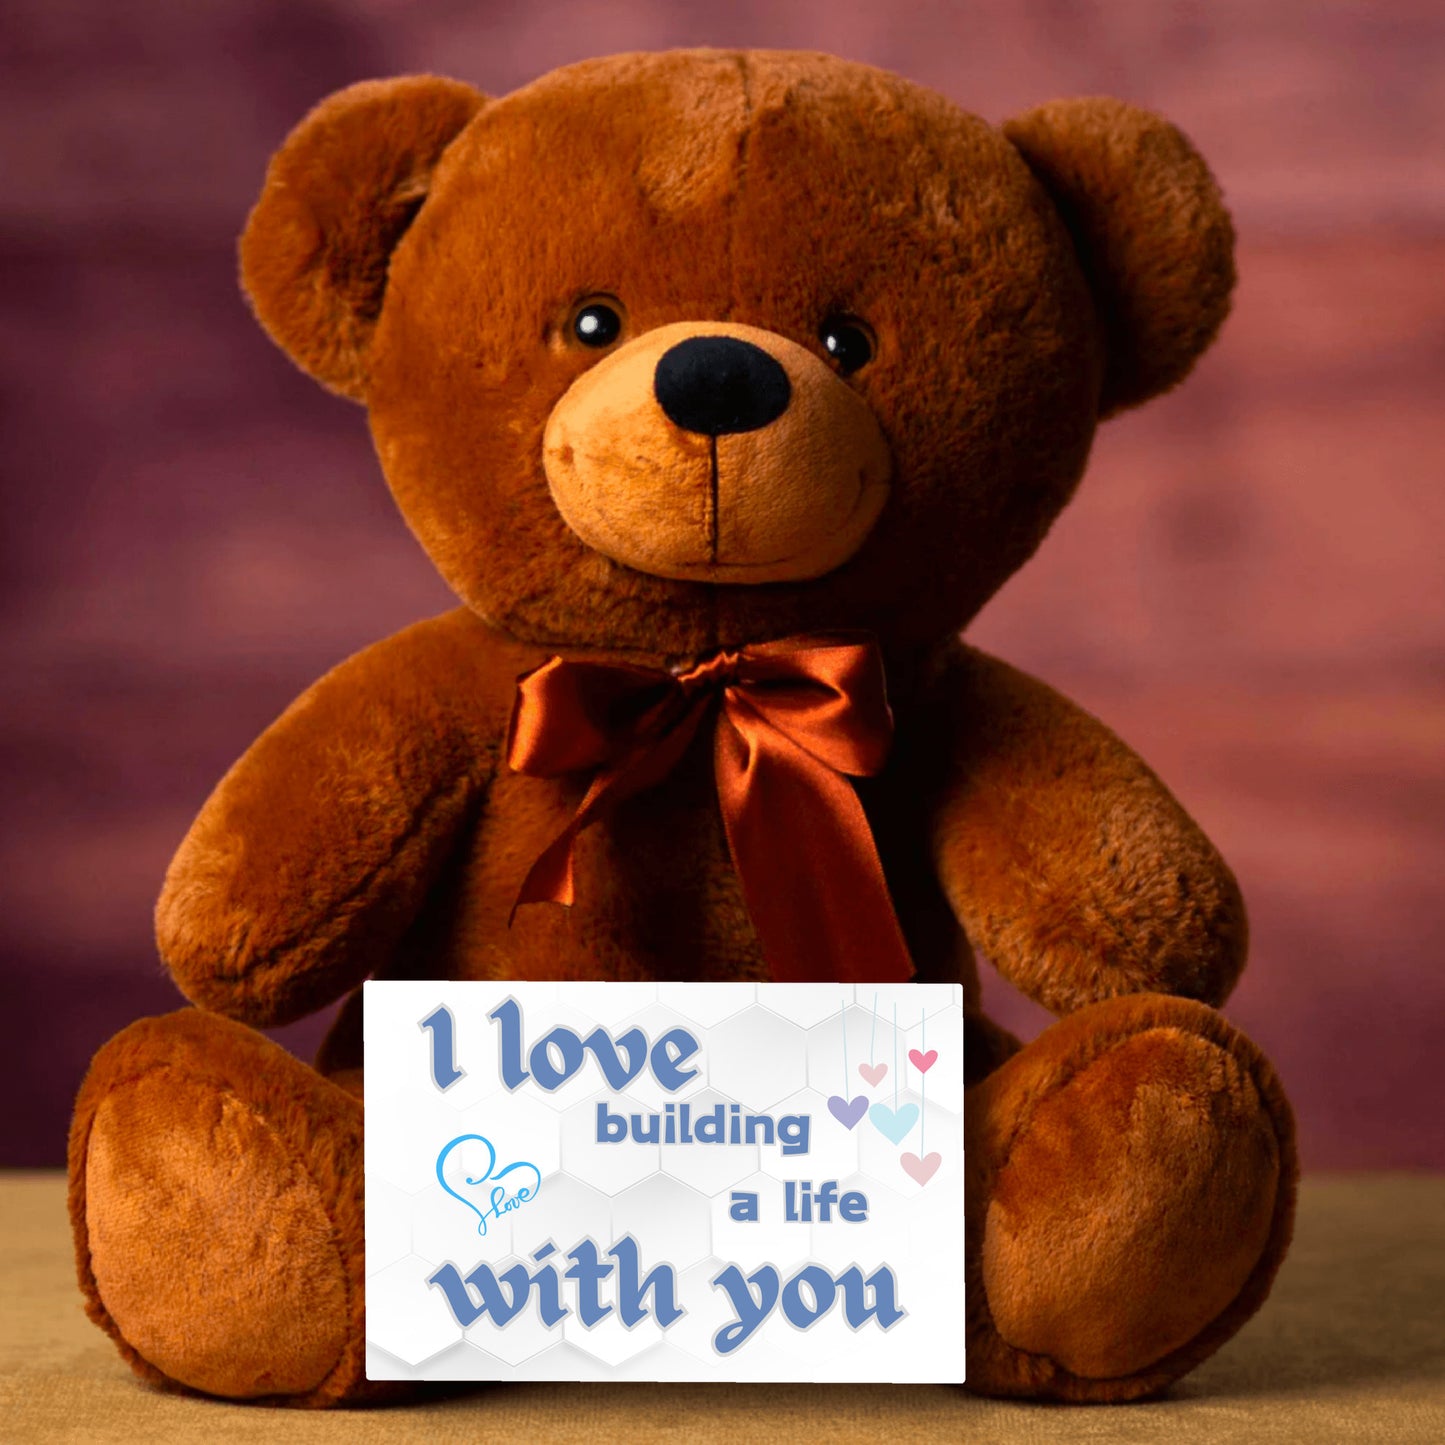 I love building a life with you - Teddy Bear